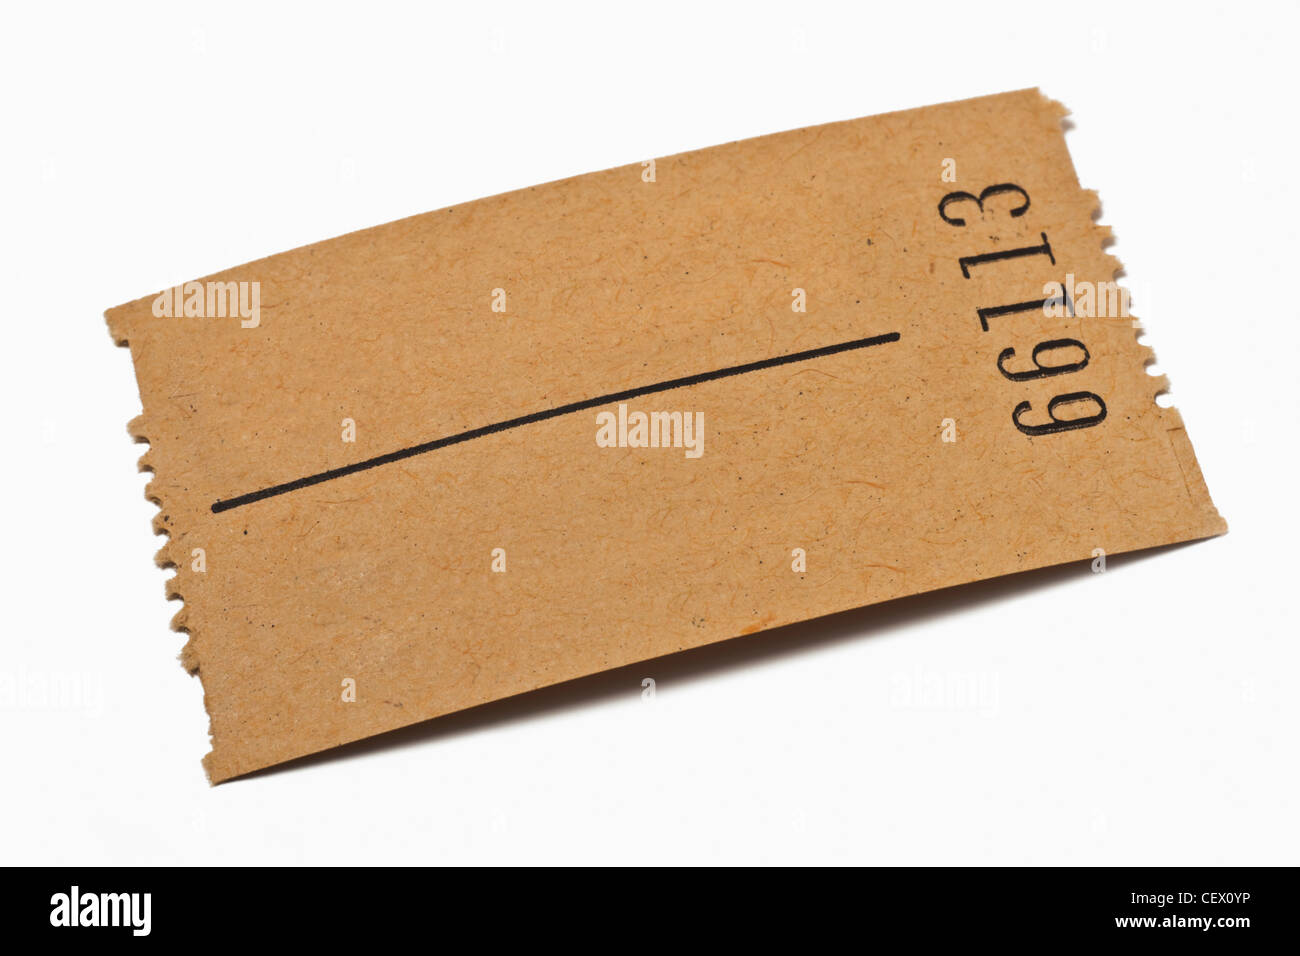 Detailansicht einer Karte aus Papier ohne Aufschrift | Detail photo of a paper card without inscription Stock Photo